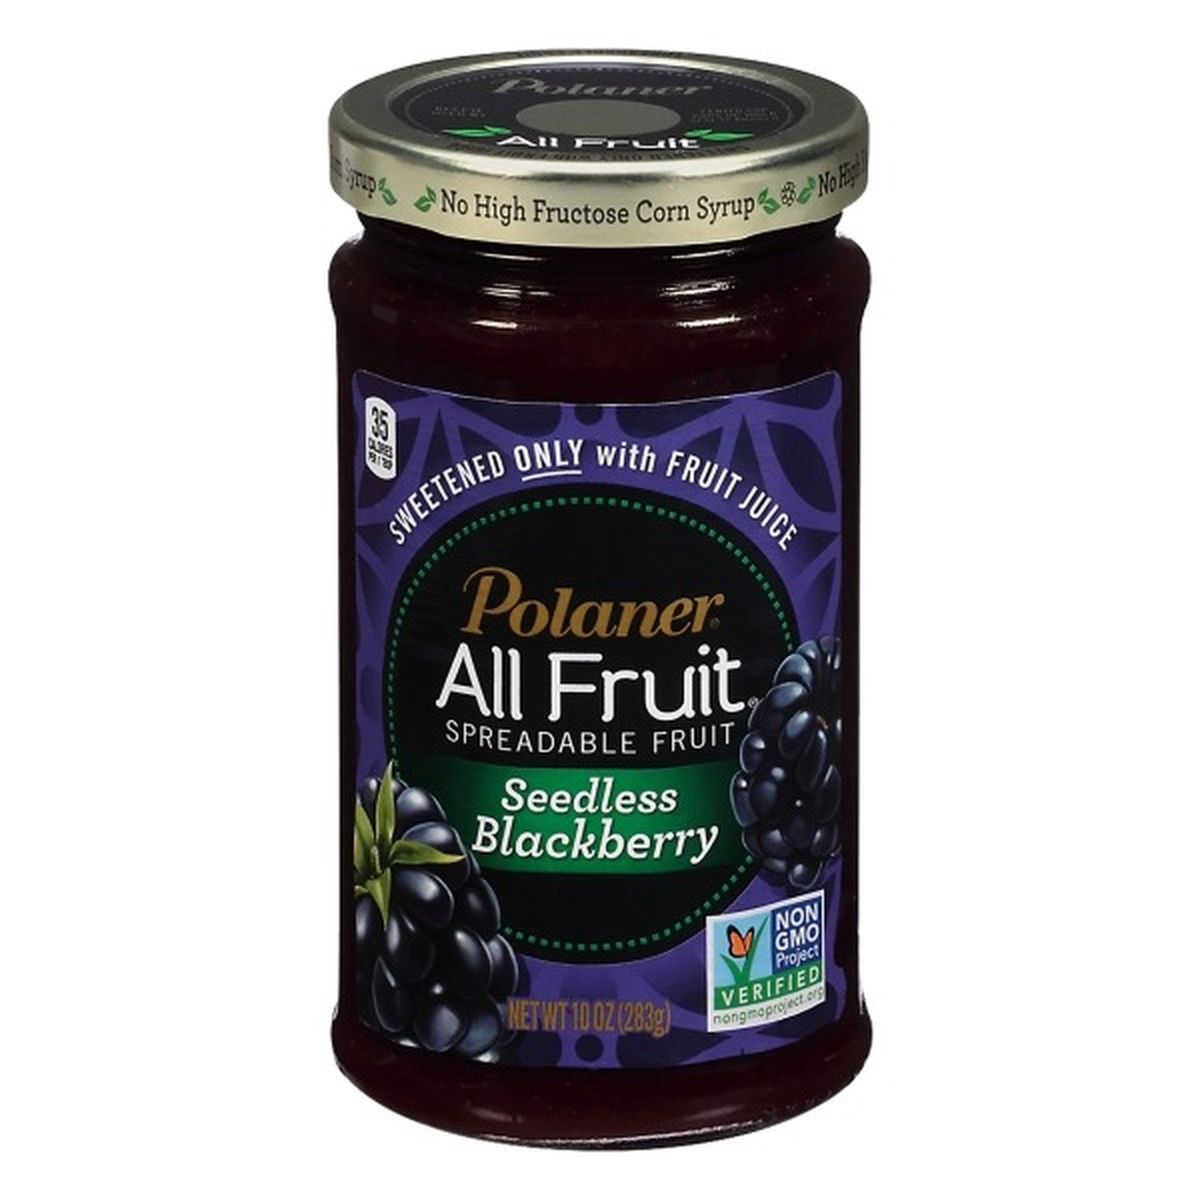 Calories in Polaner All Fruit Spreadable Fruit, Seedless Blackberry